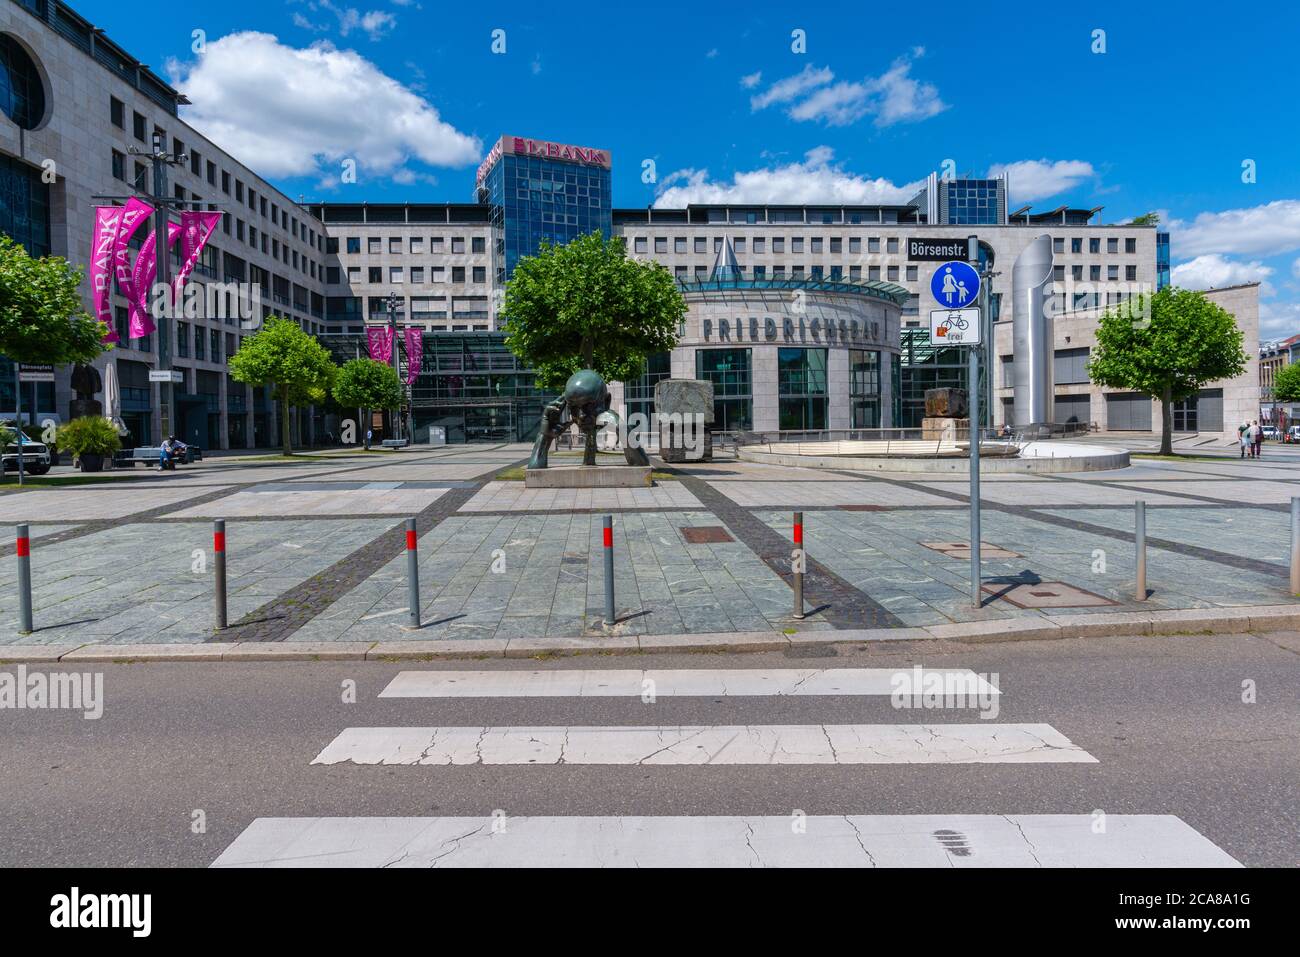 Börsenplatz square with state bank Baden-Wuerttemberg and Friedrichsbau, Stuttgart, city centre,  federal state of Baden-Württemberg, South Germany Stock Photo